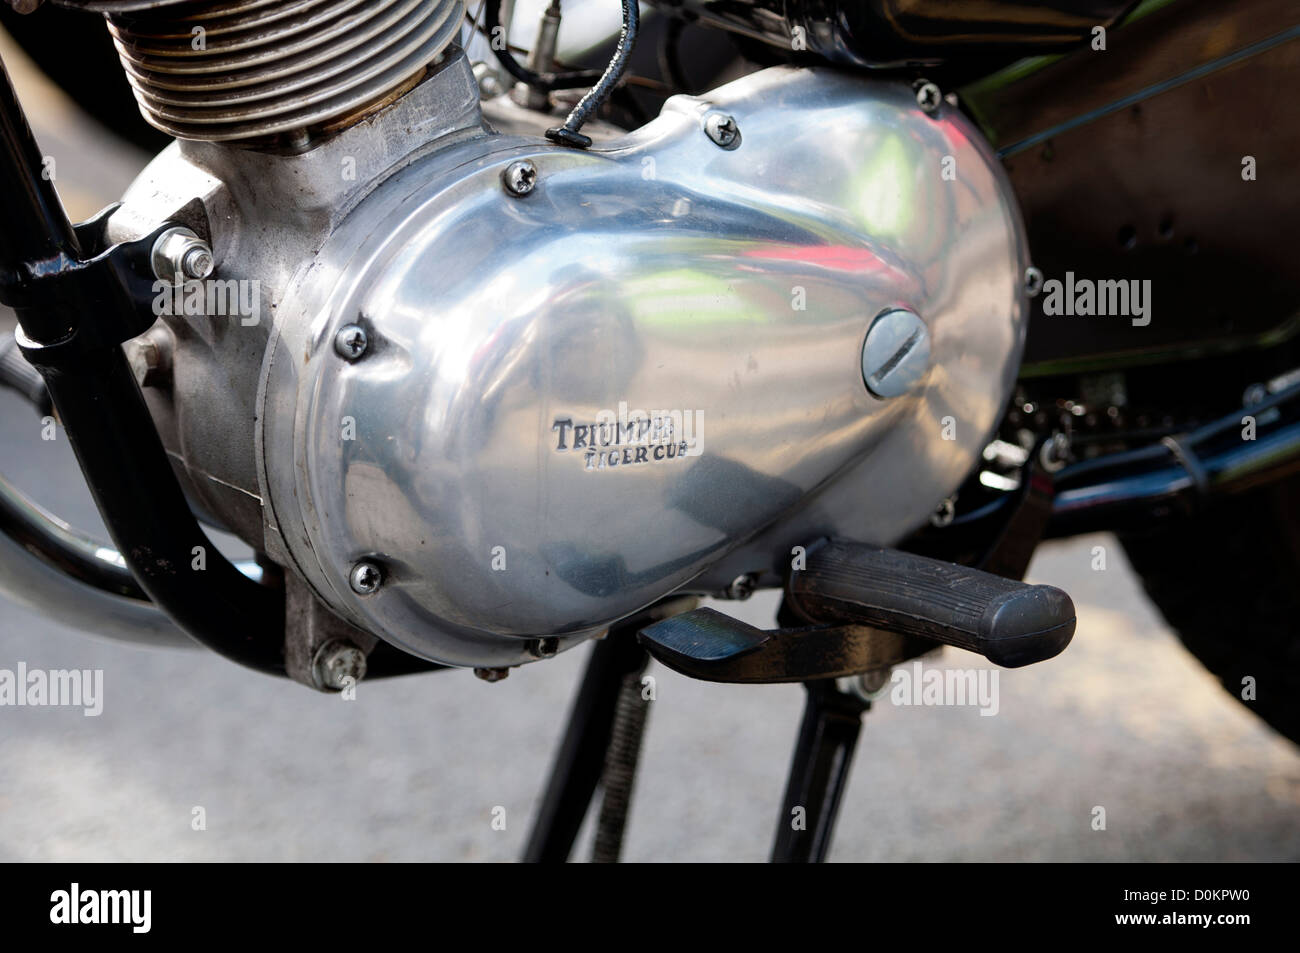 Triumph Tiger Cub motorcycle Stock Photo - Alamy